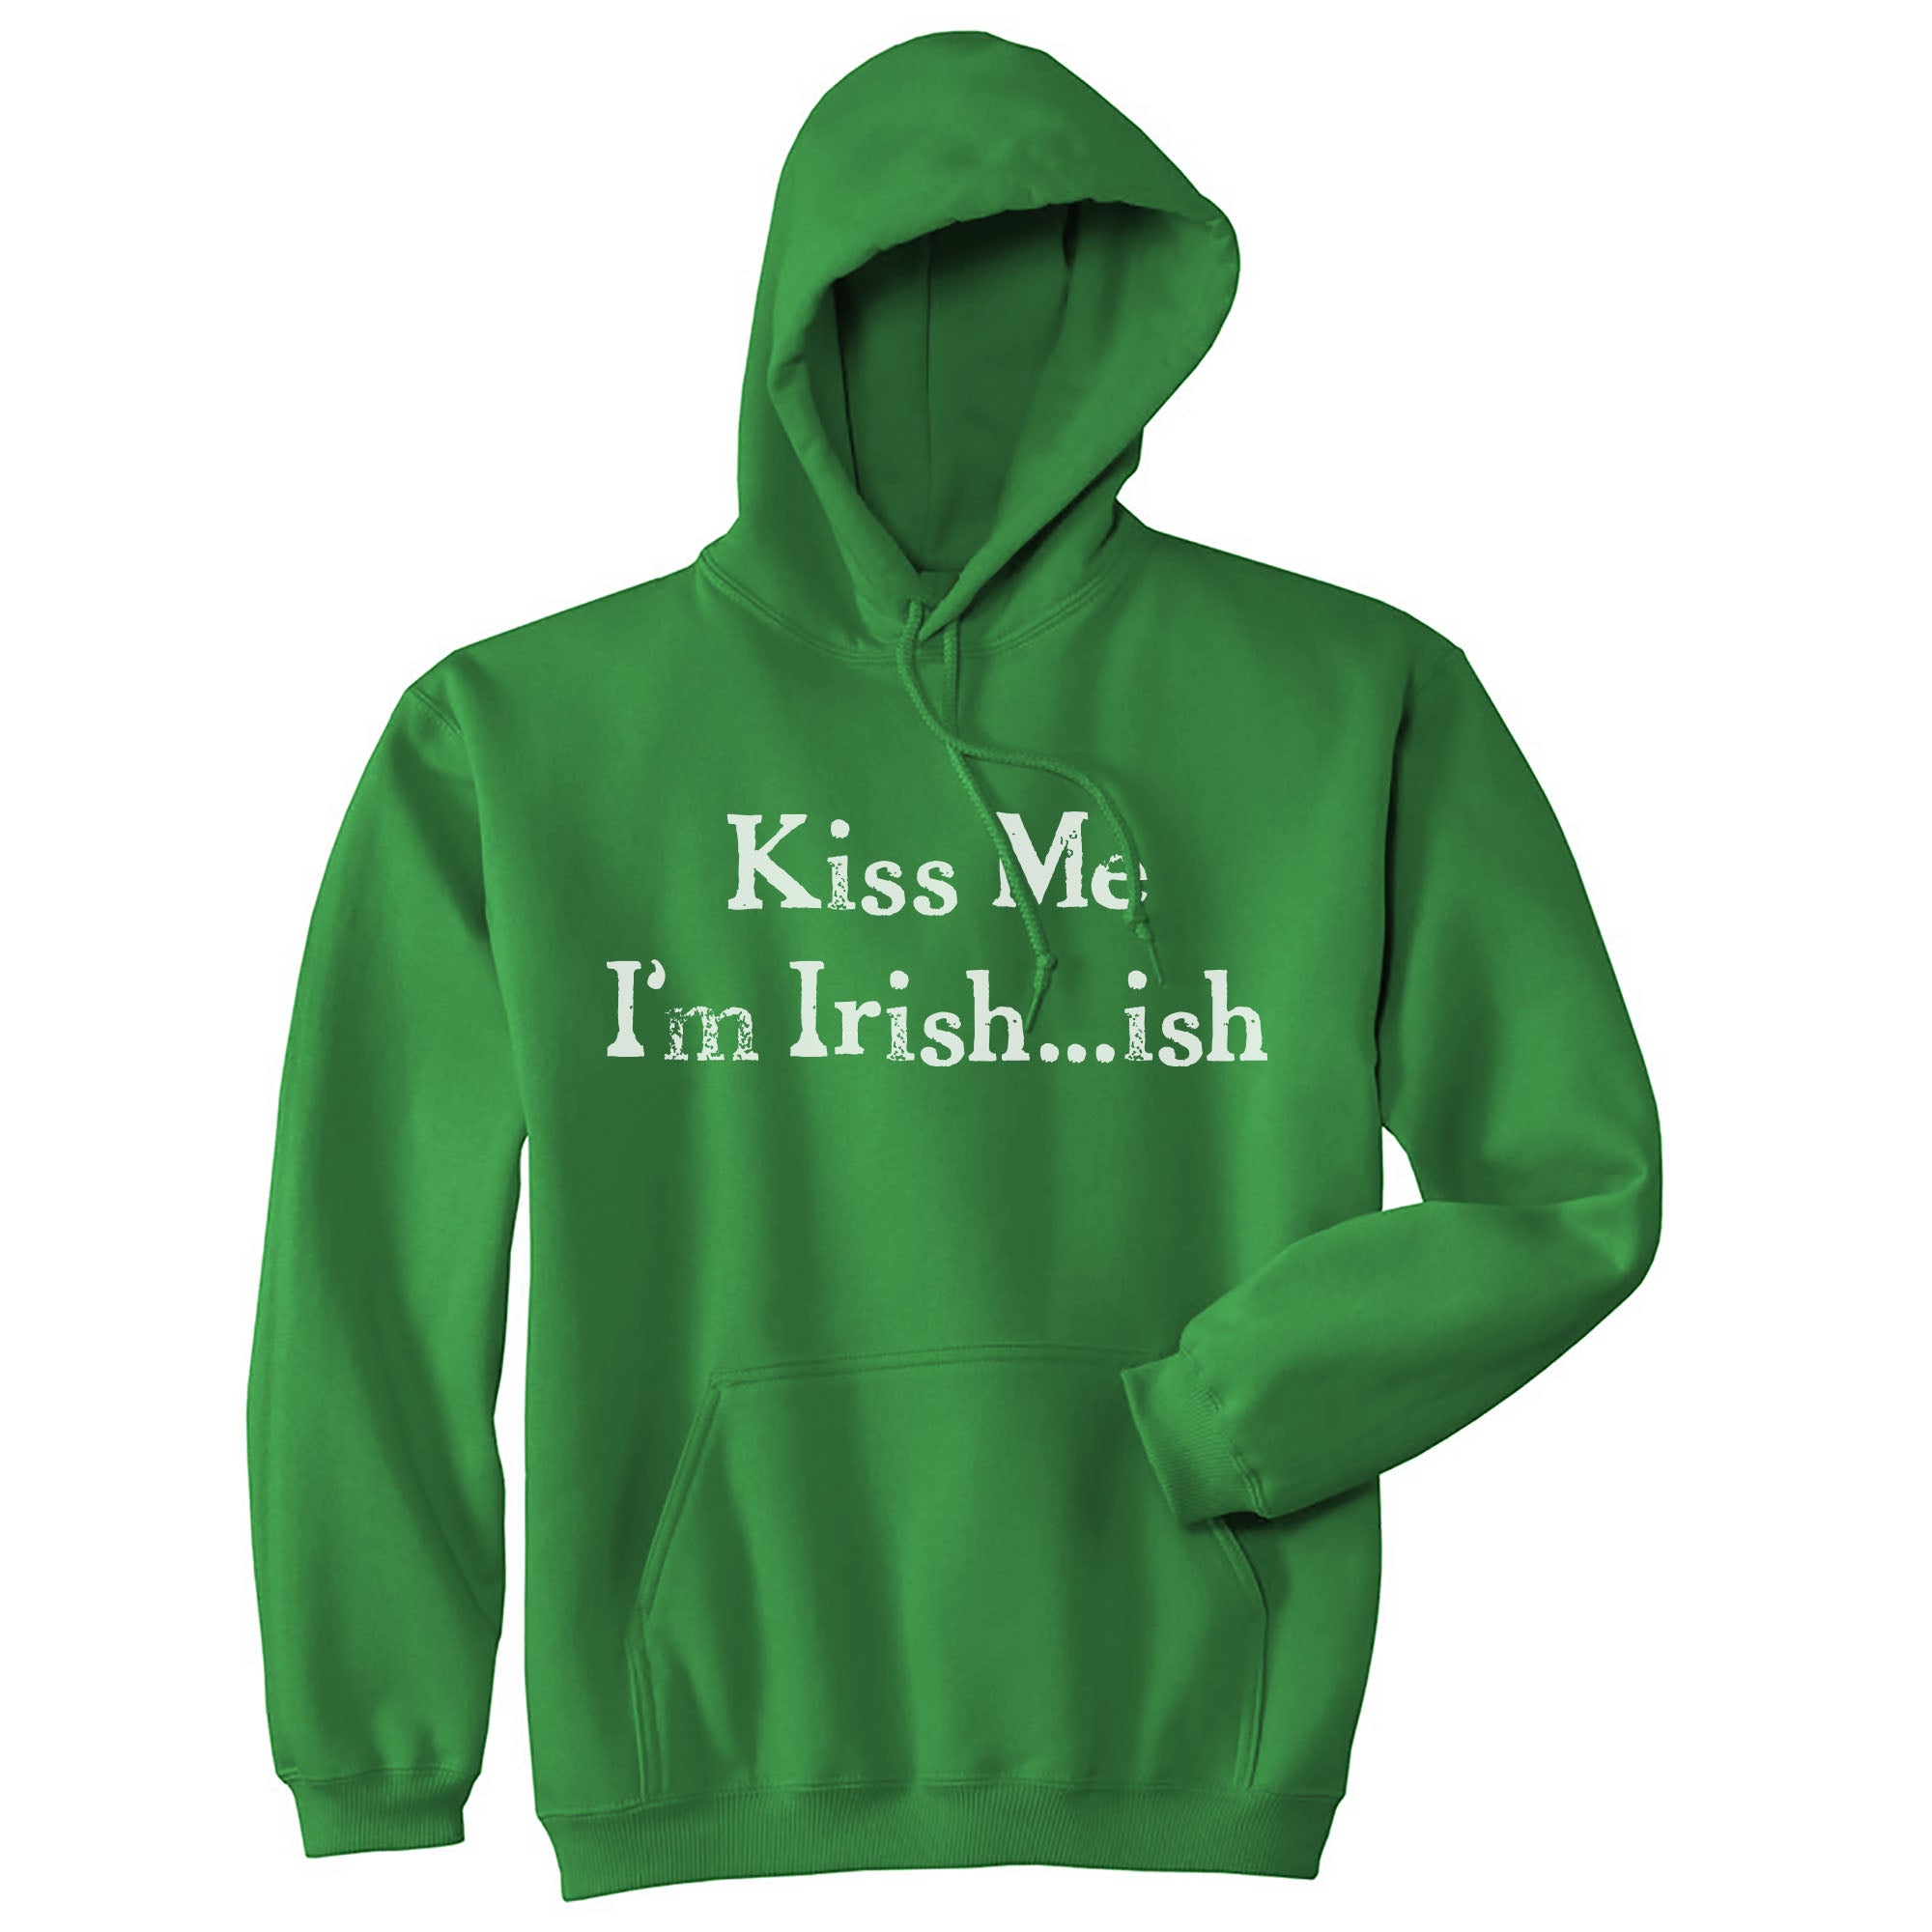 Funny Green Kiss Me I'm Irish…ish Hoodie Nerdy Saint Patrick's Day Sarcastic Tee